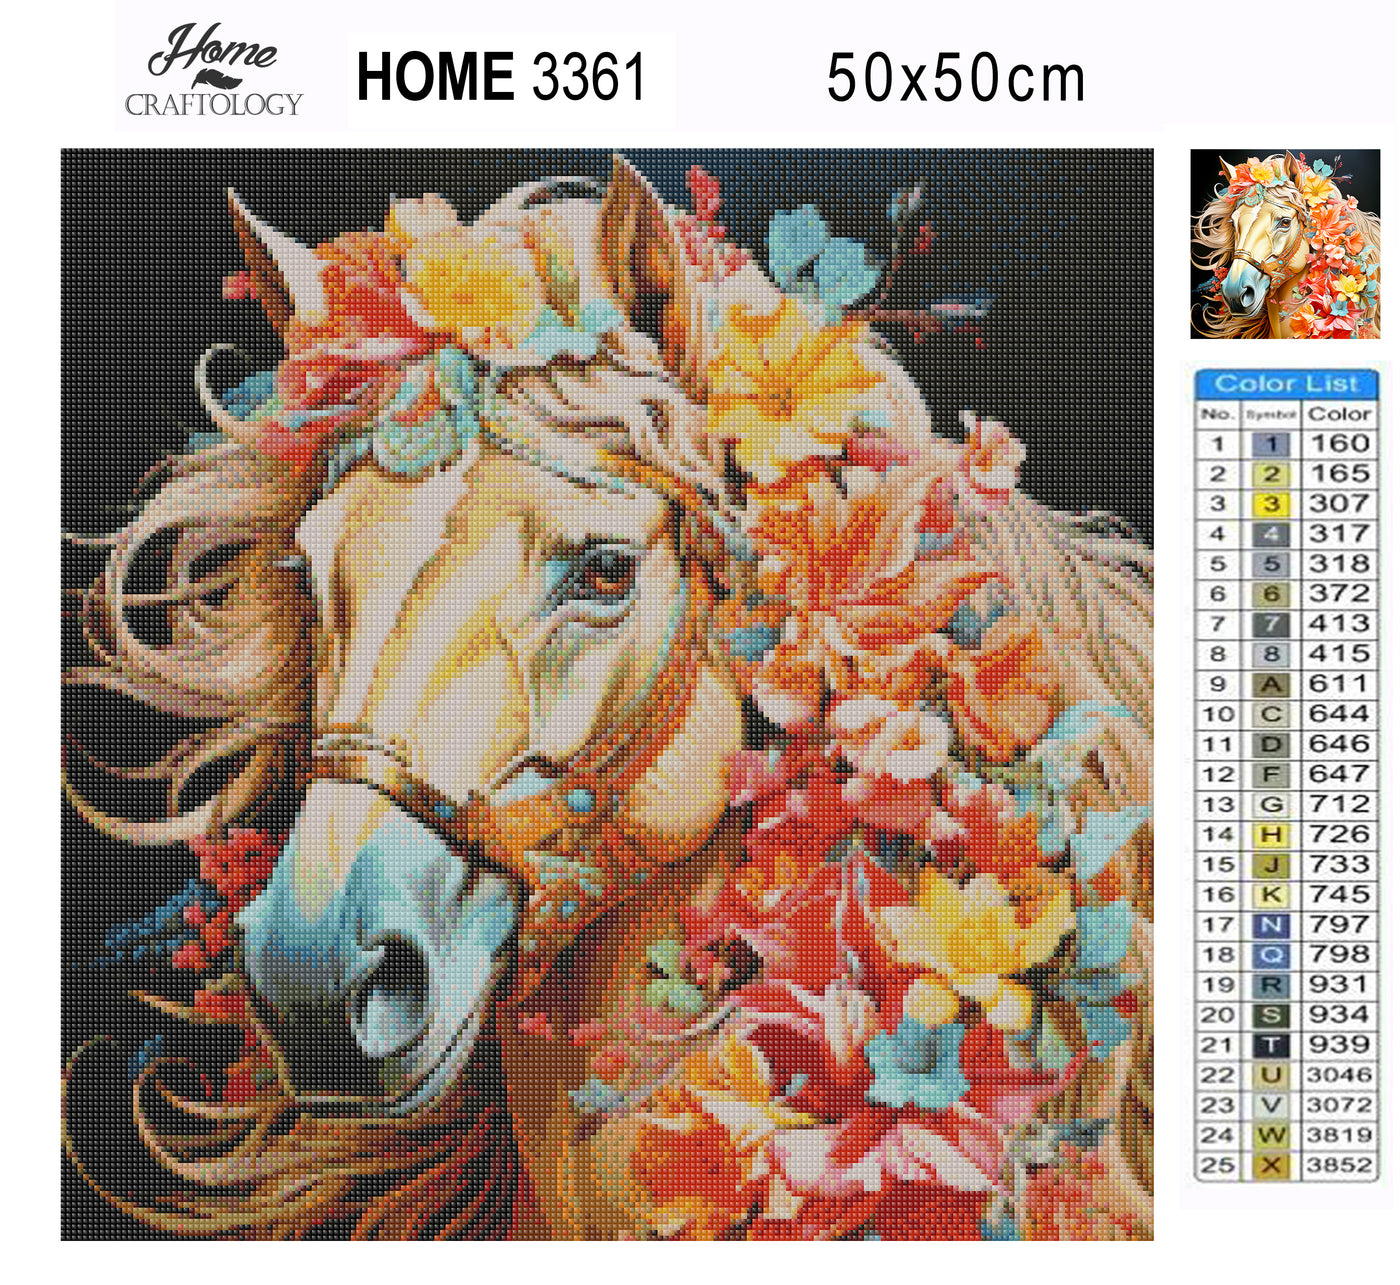 Horse with Flowers - Premium Diamond Painting Kit